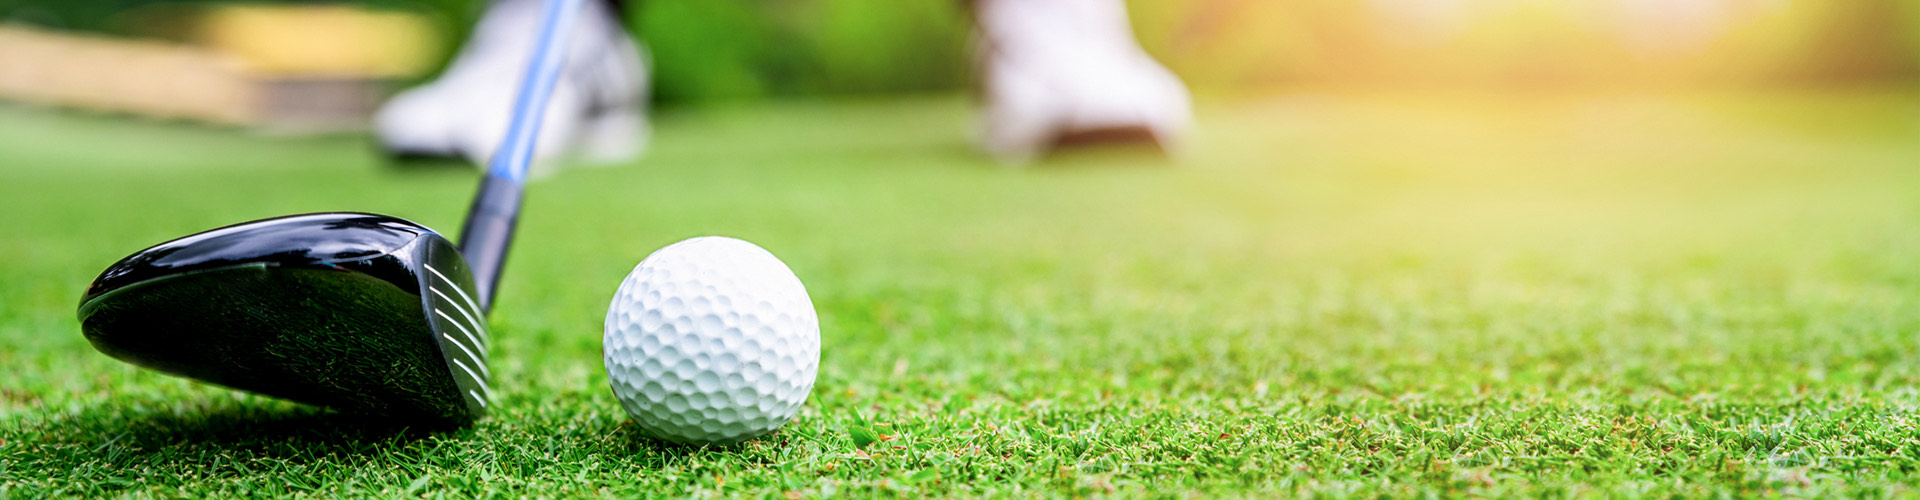 19 hole sports header with close up on golf club hitting golf ball